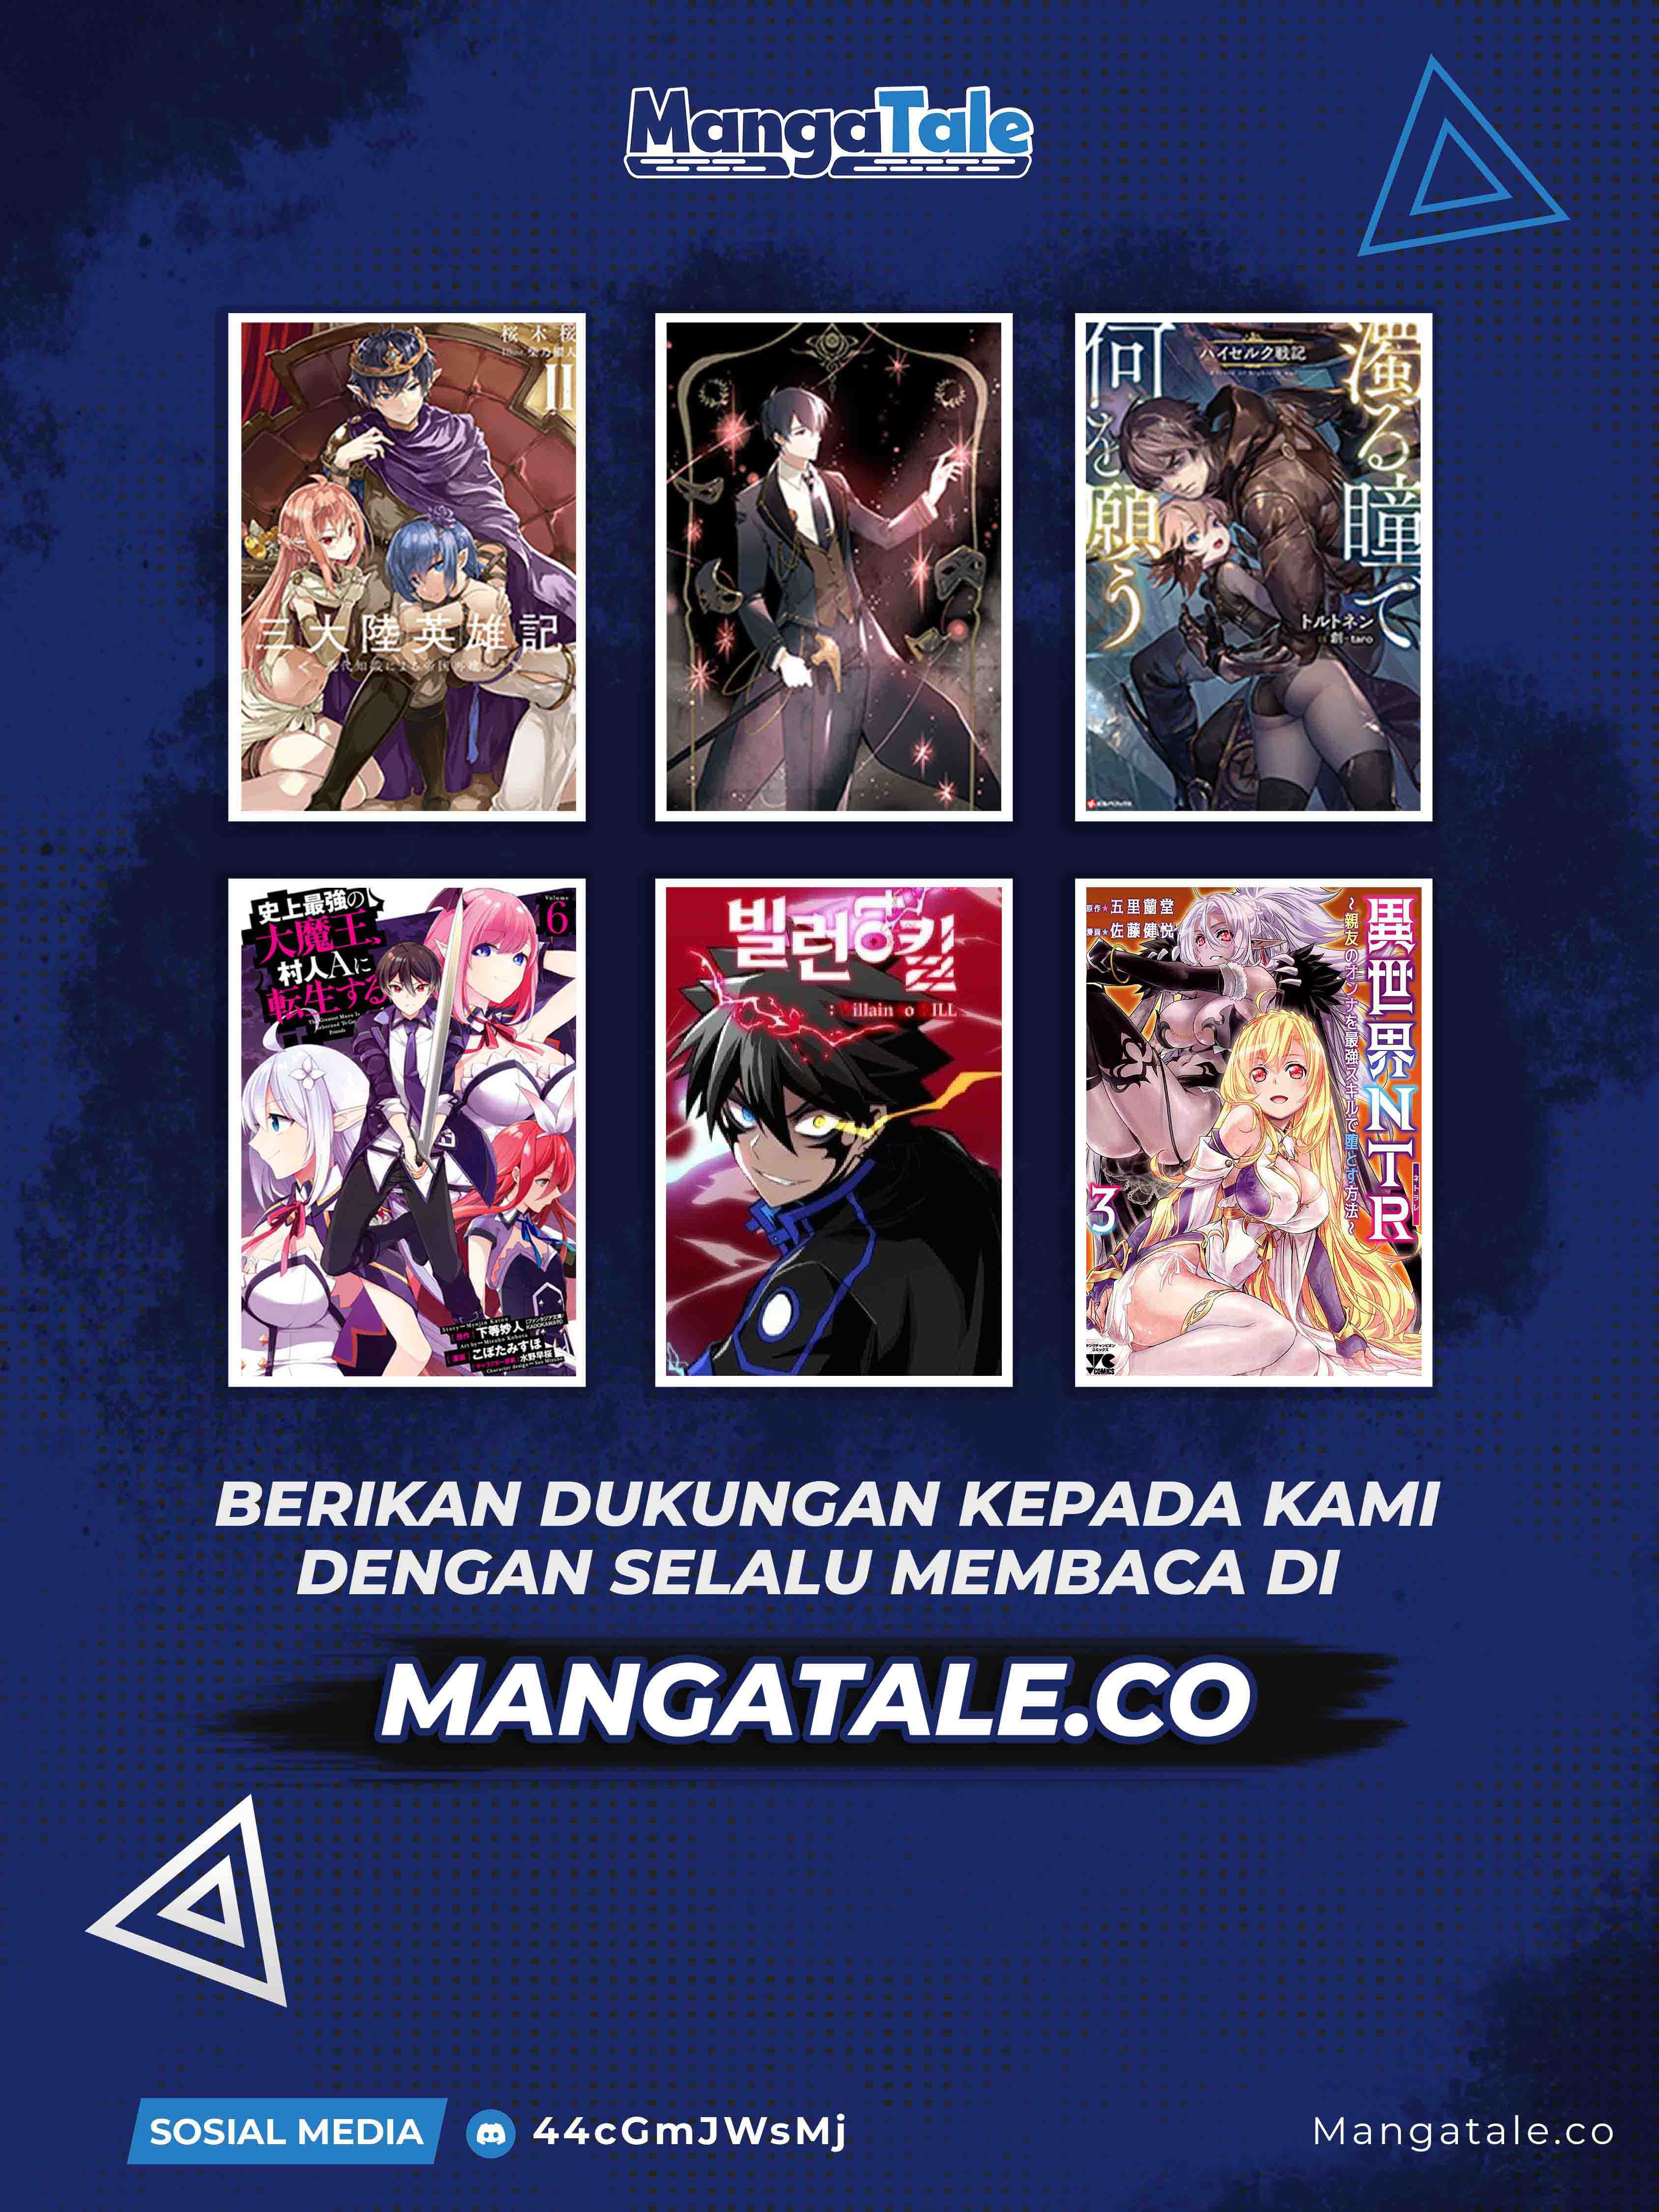 Knights & Magic Chapter 49 Bahasa Indonesia